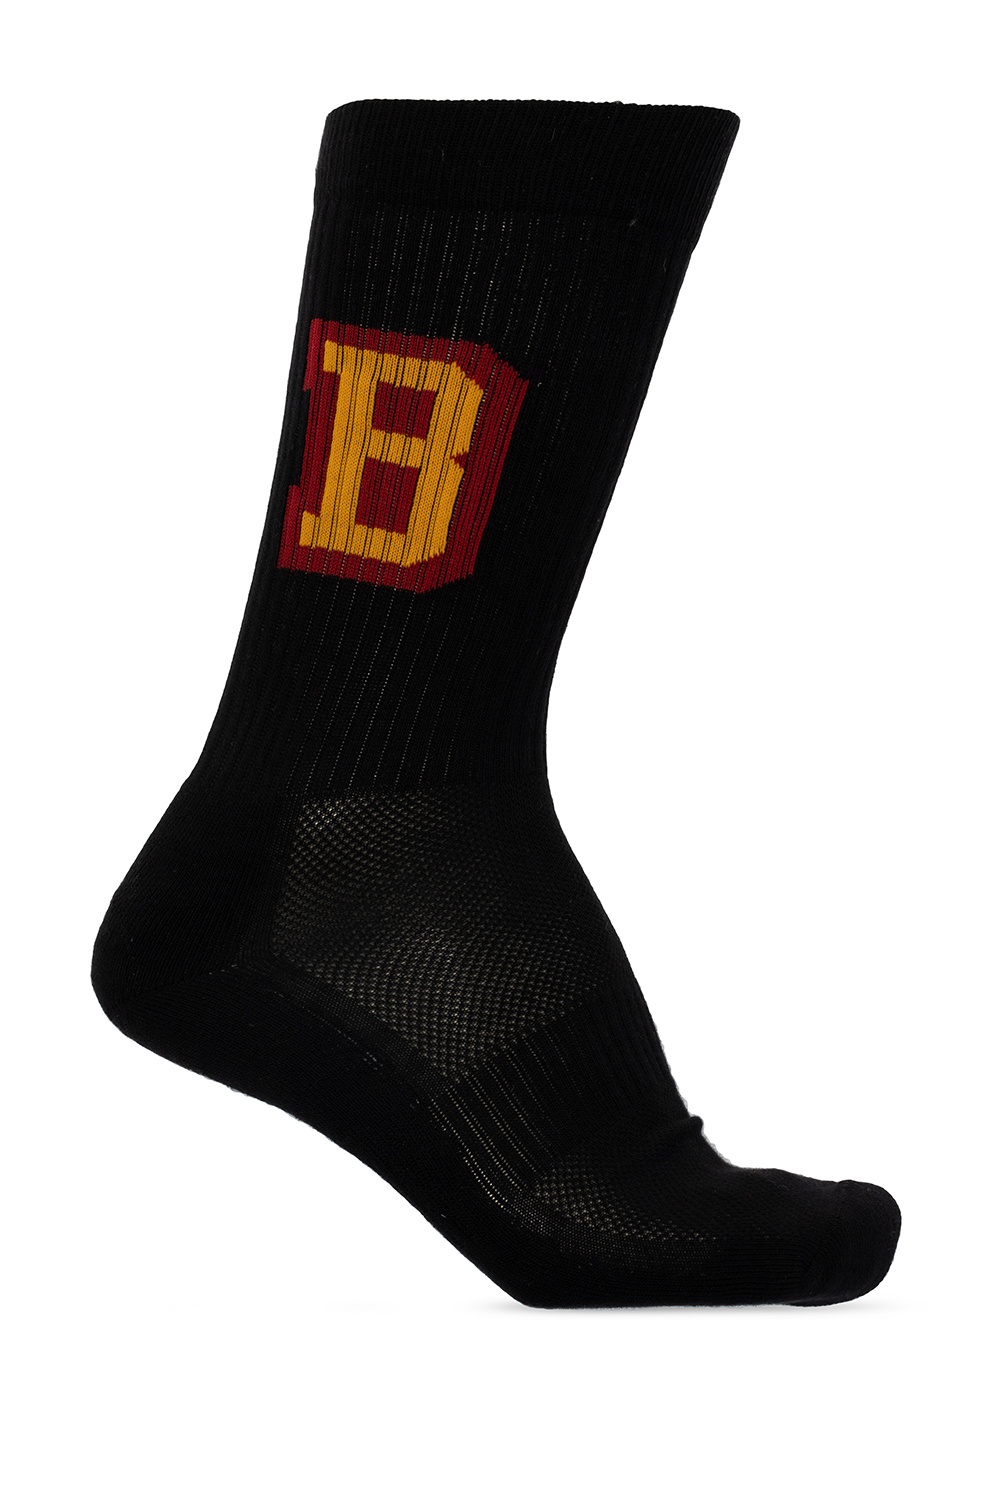 Bel Air Athletics Ribbed socks with logo